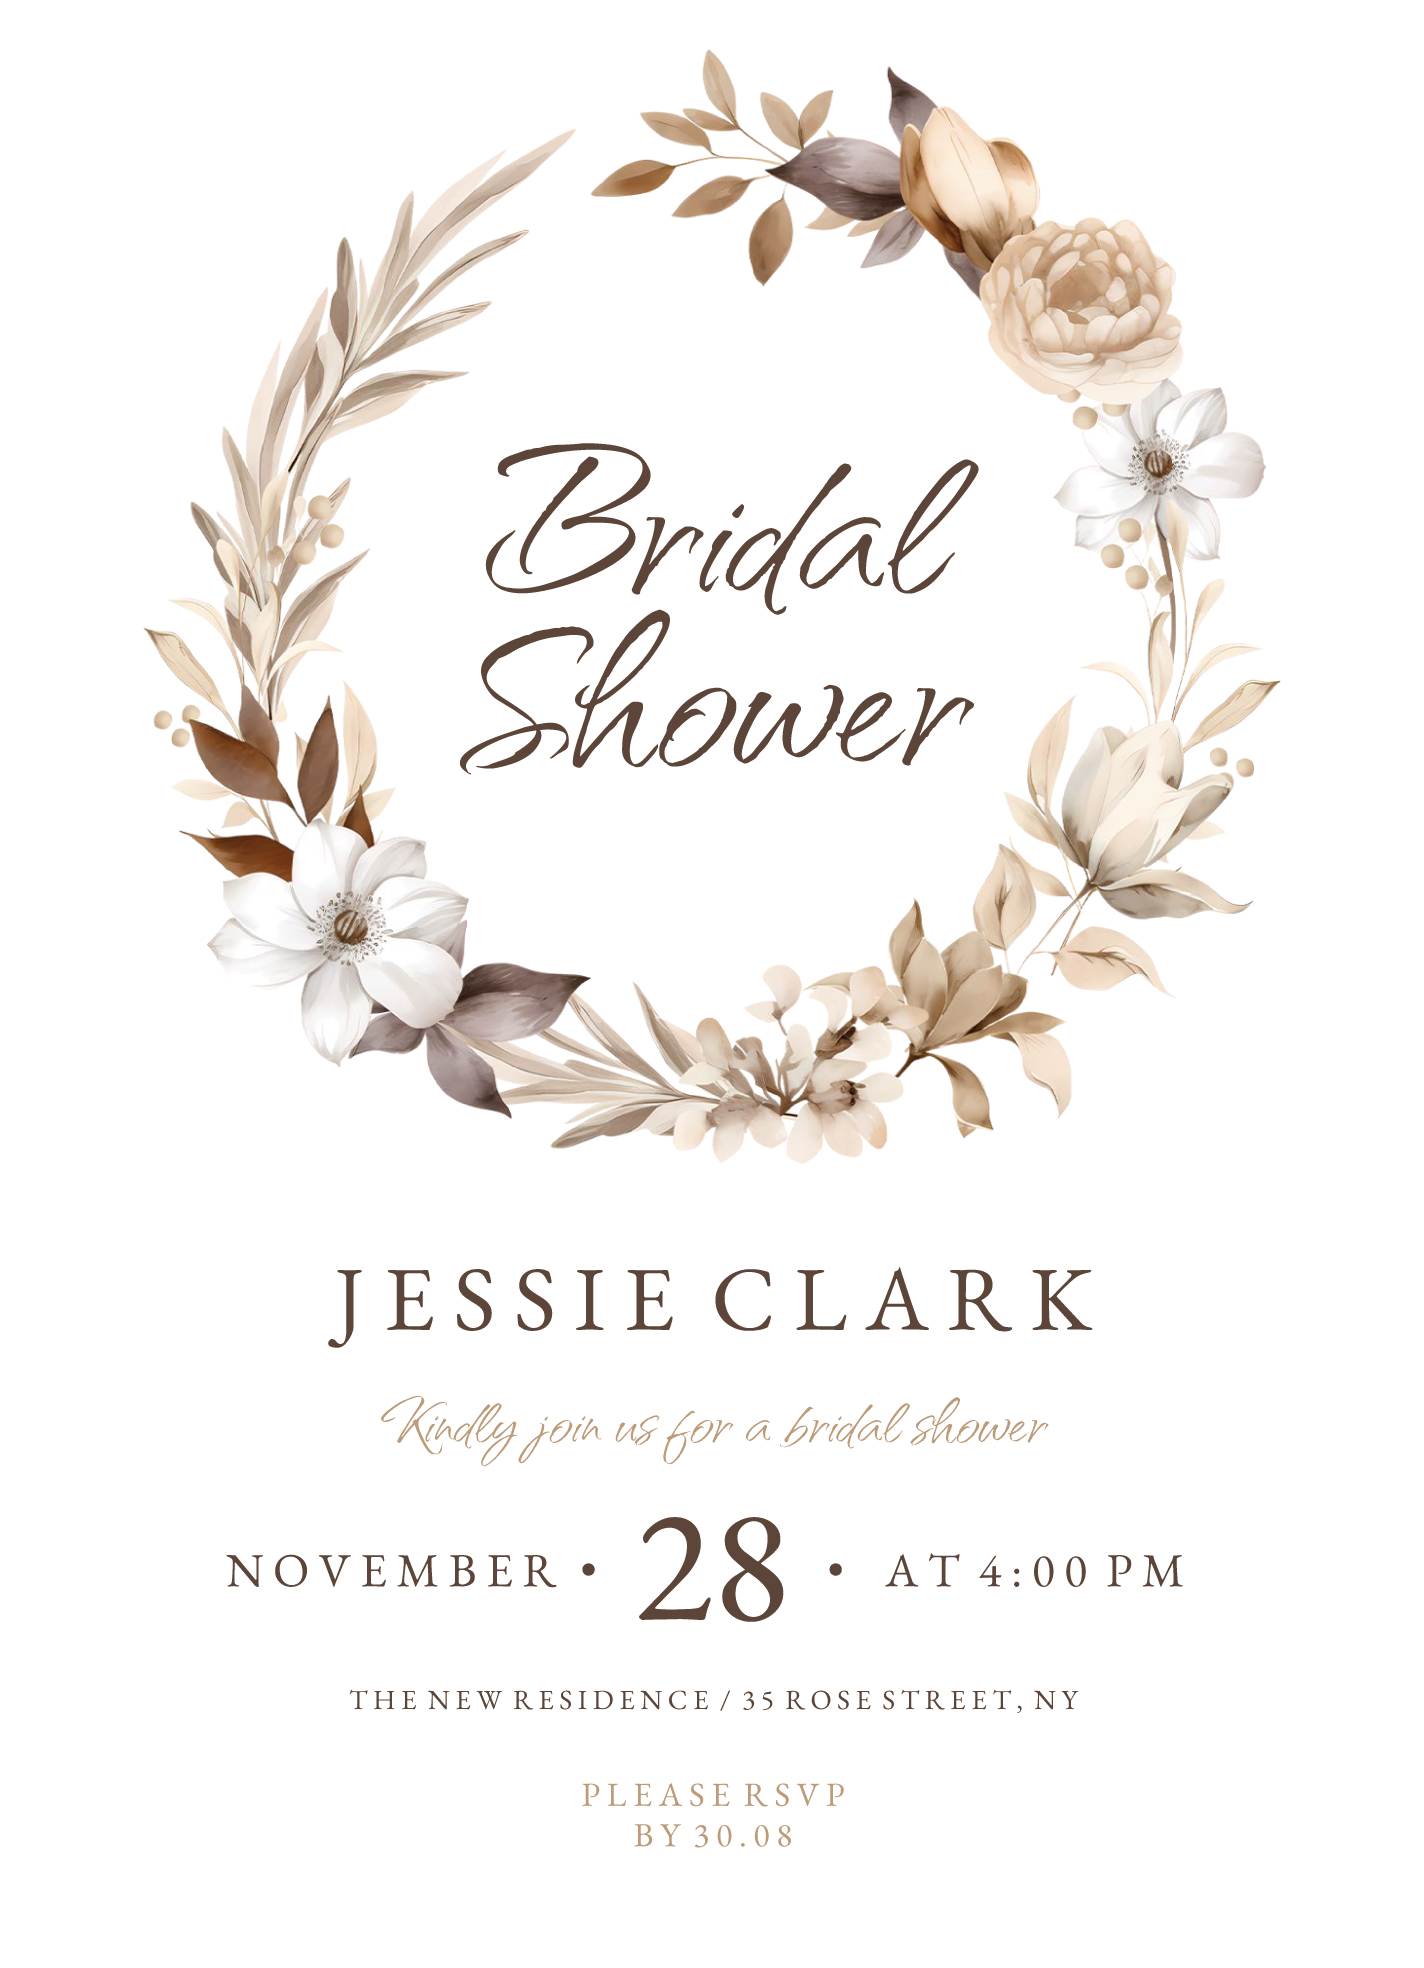 https://gdoc.io/uploads/rustic-wedding-bridal-shower-invitation-free-google-docs-template-t.jpg